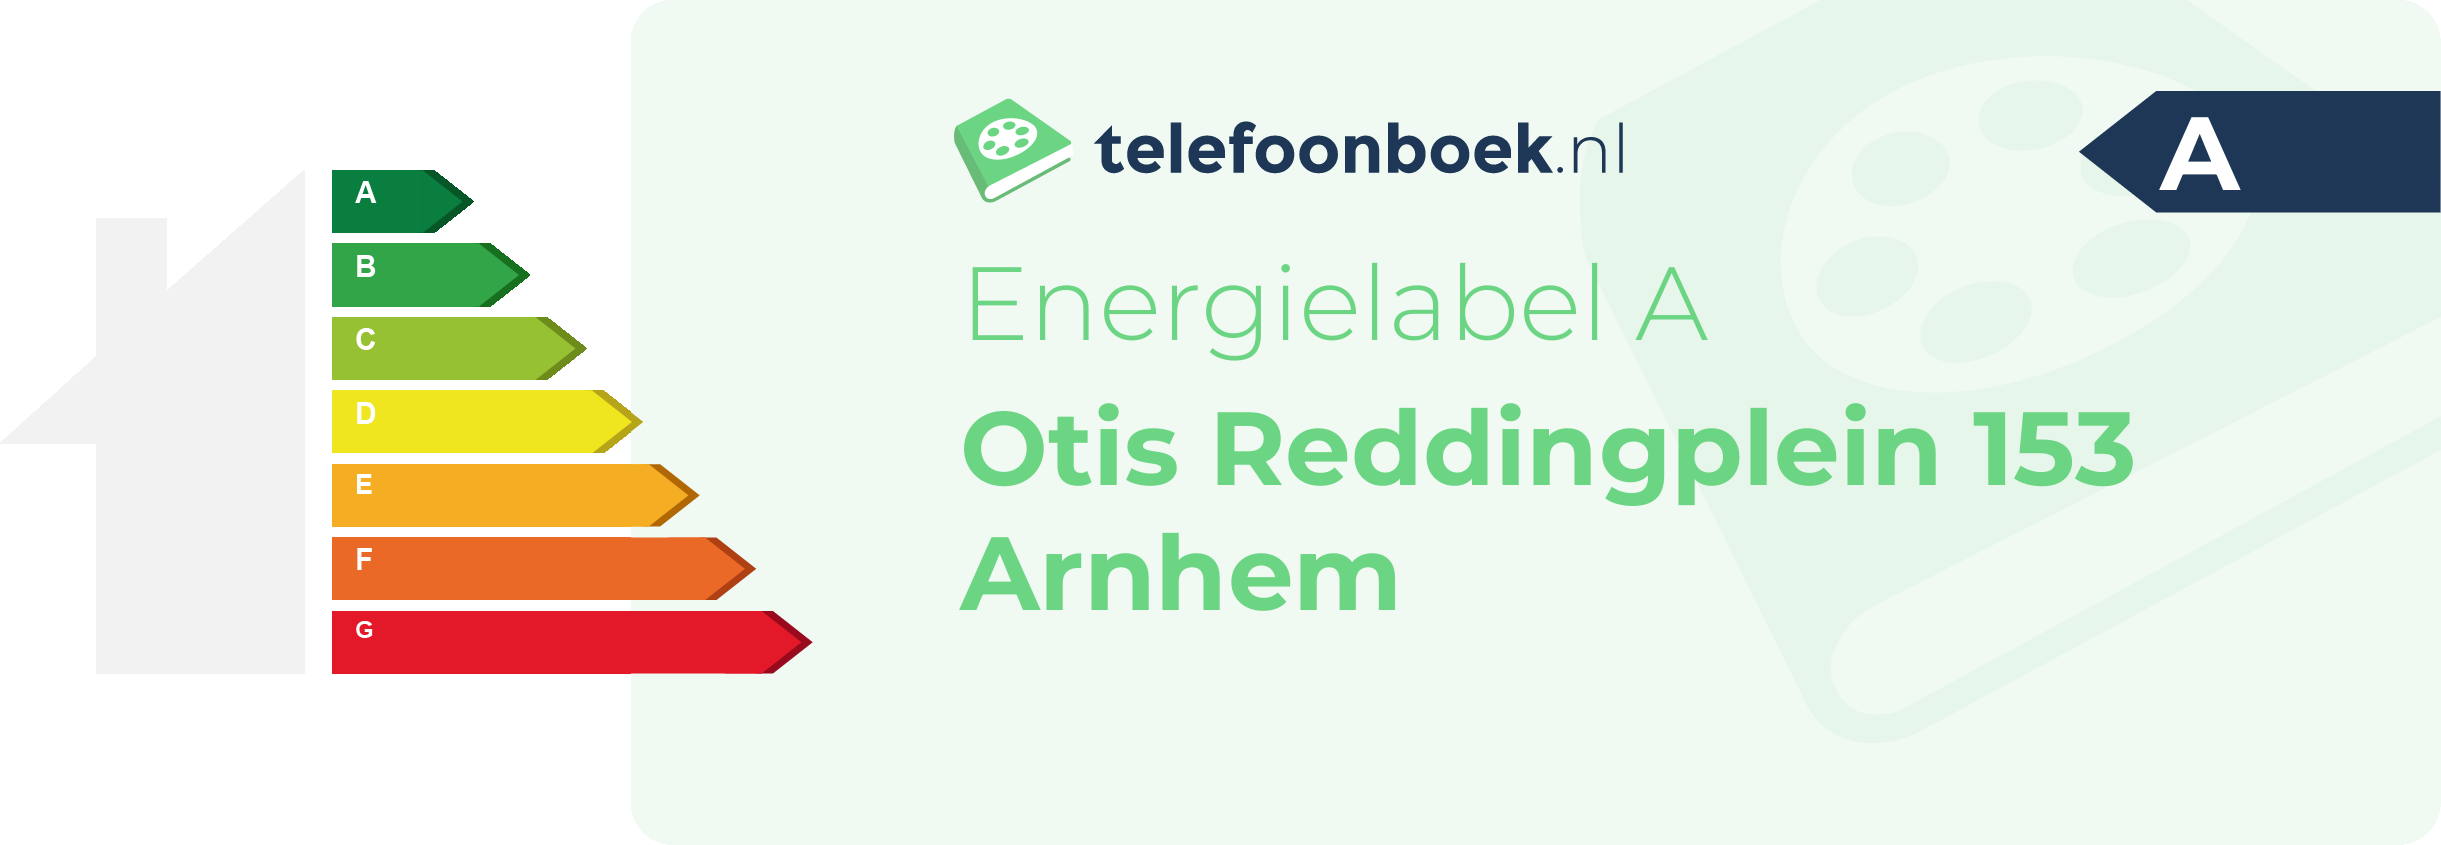 Energielabel Otis Reddingplein 153 Arnhem